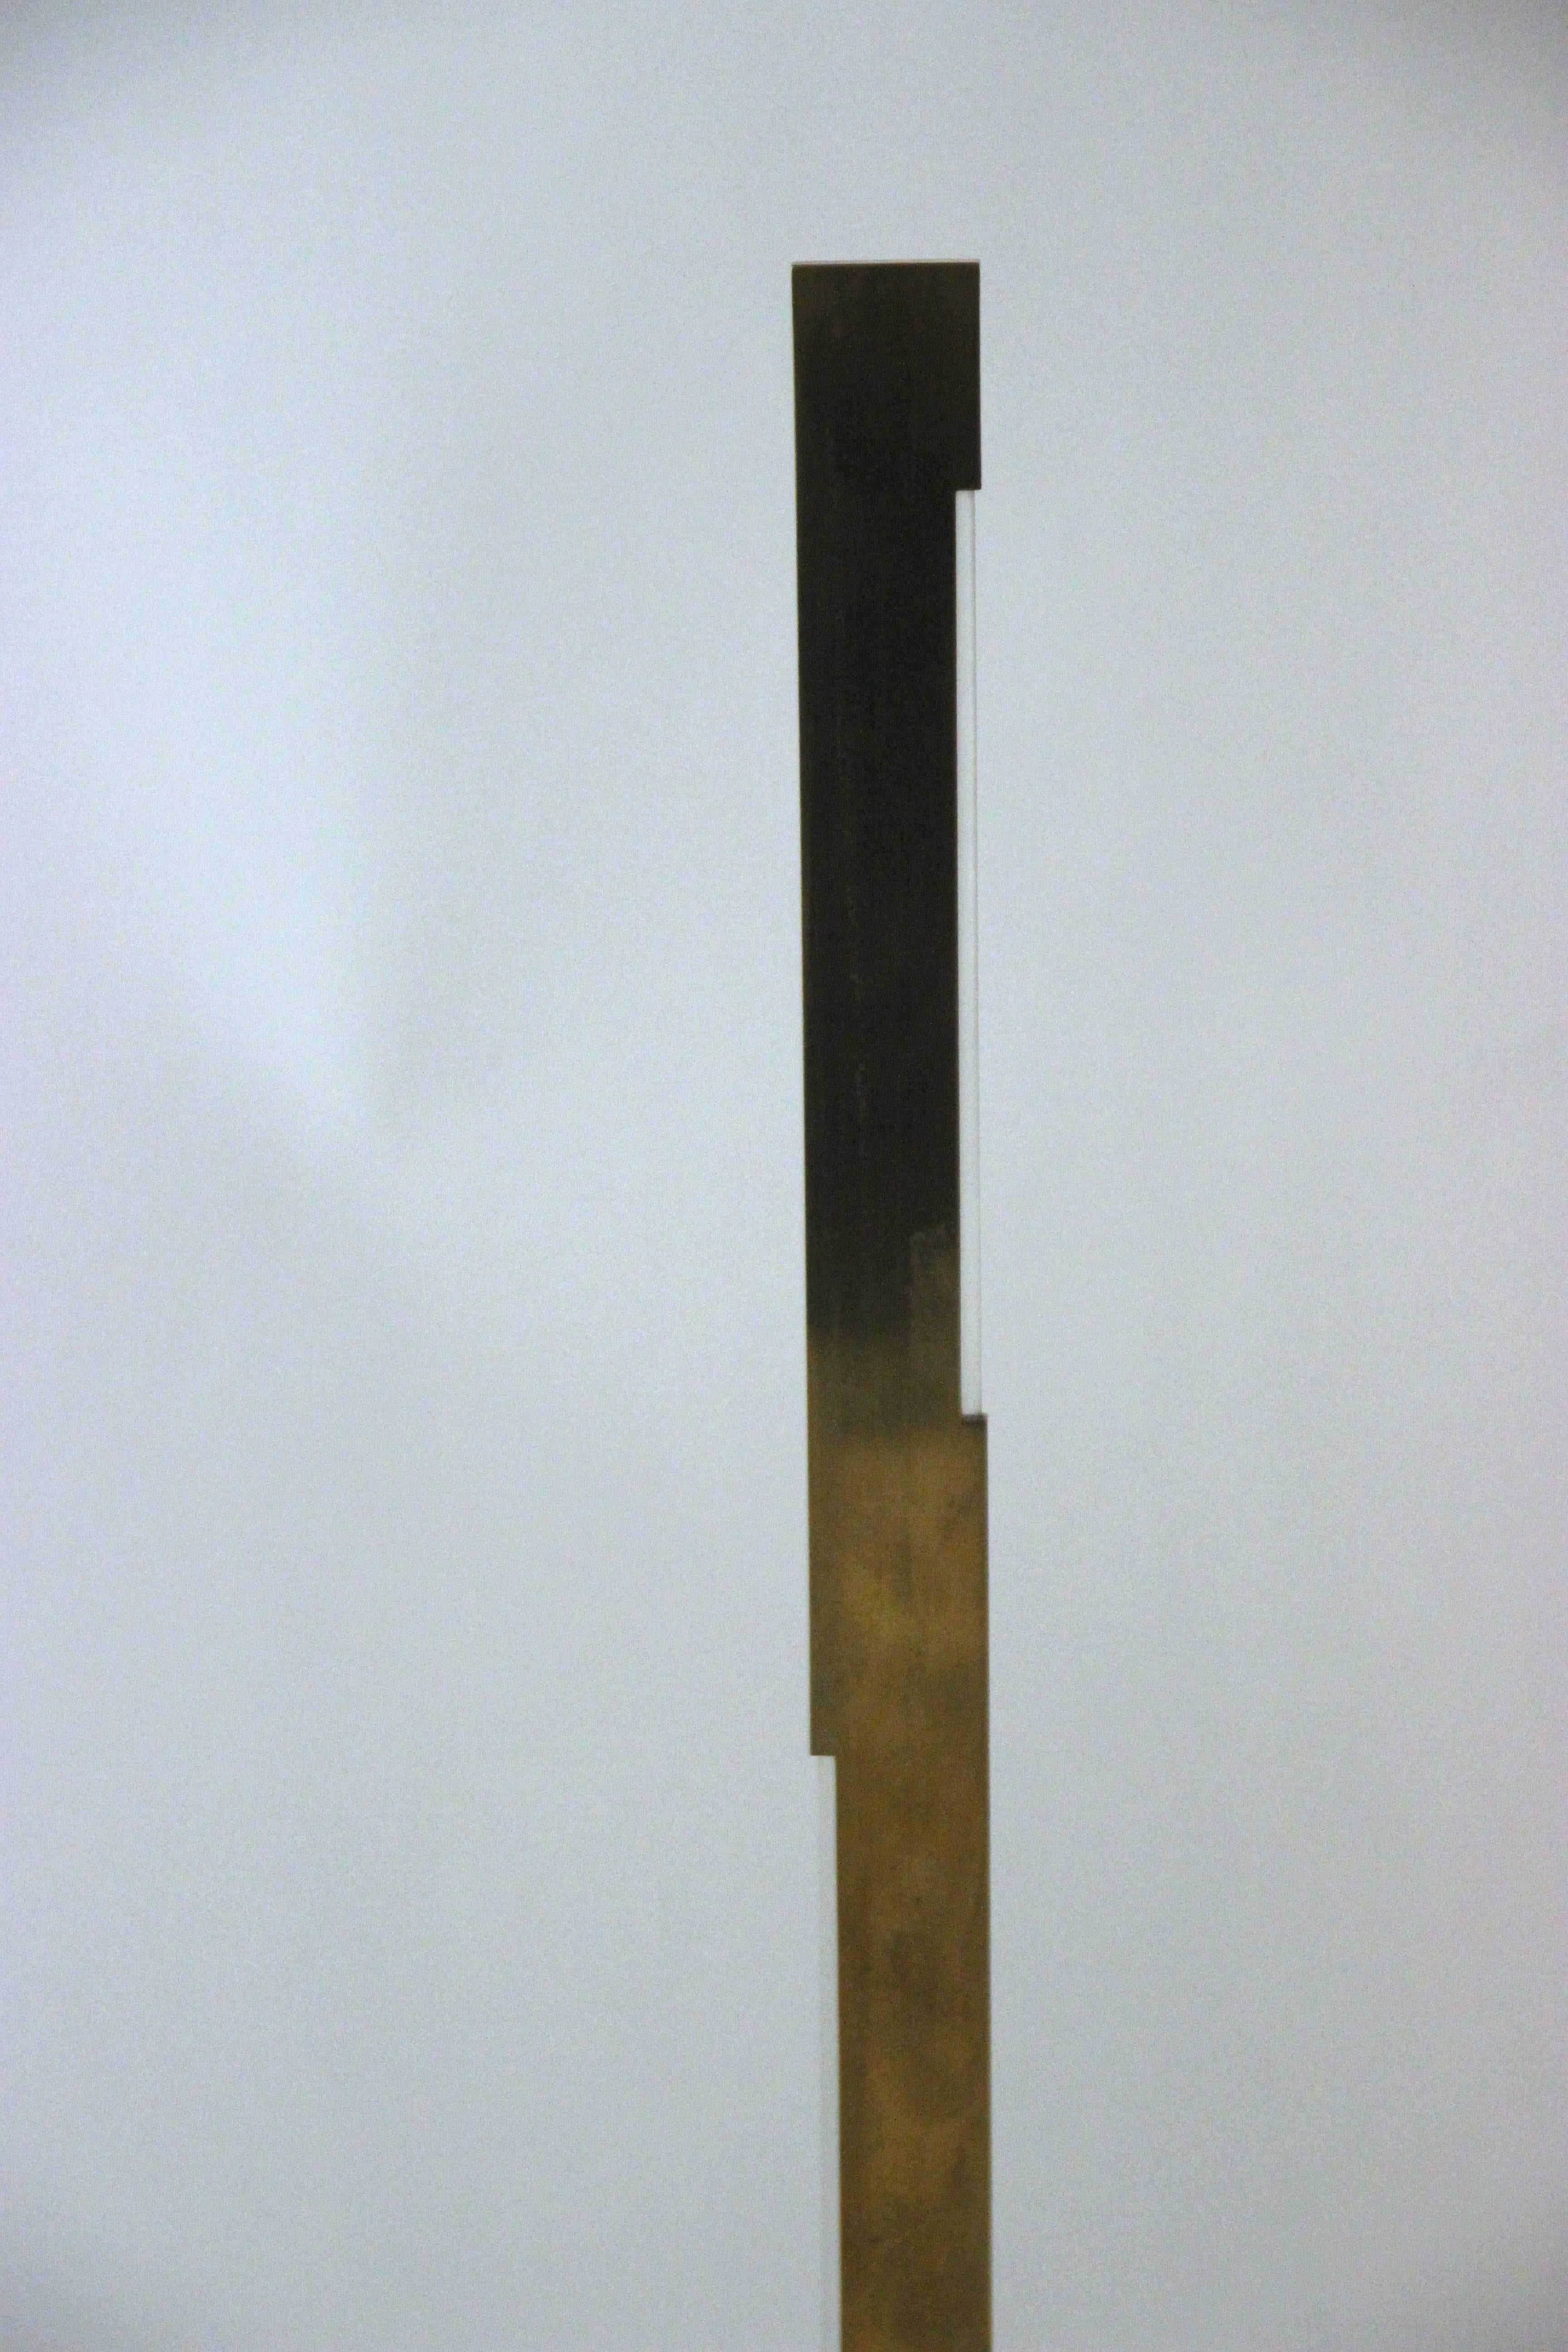 Vladimir Slavov, Line 04 table lamp,
DIM Atelier,
brass and plexiglass,
circa 2008, Bulgaria.
Hauteur: 52 cm, largeur: 10 cm, profondeur: 8 cm.